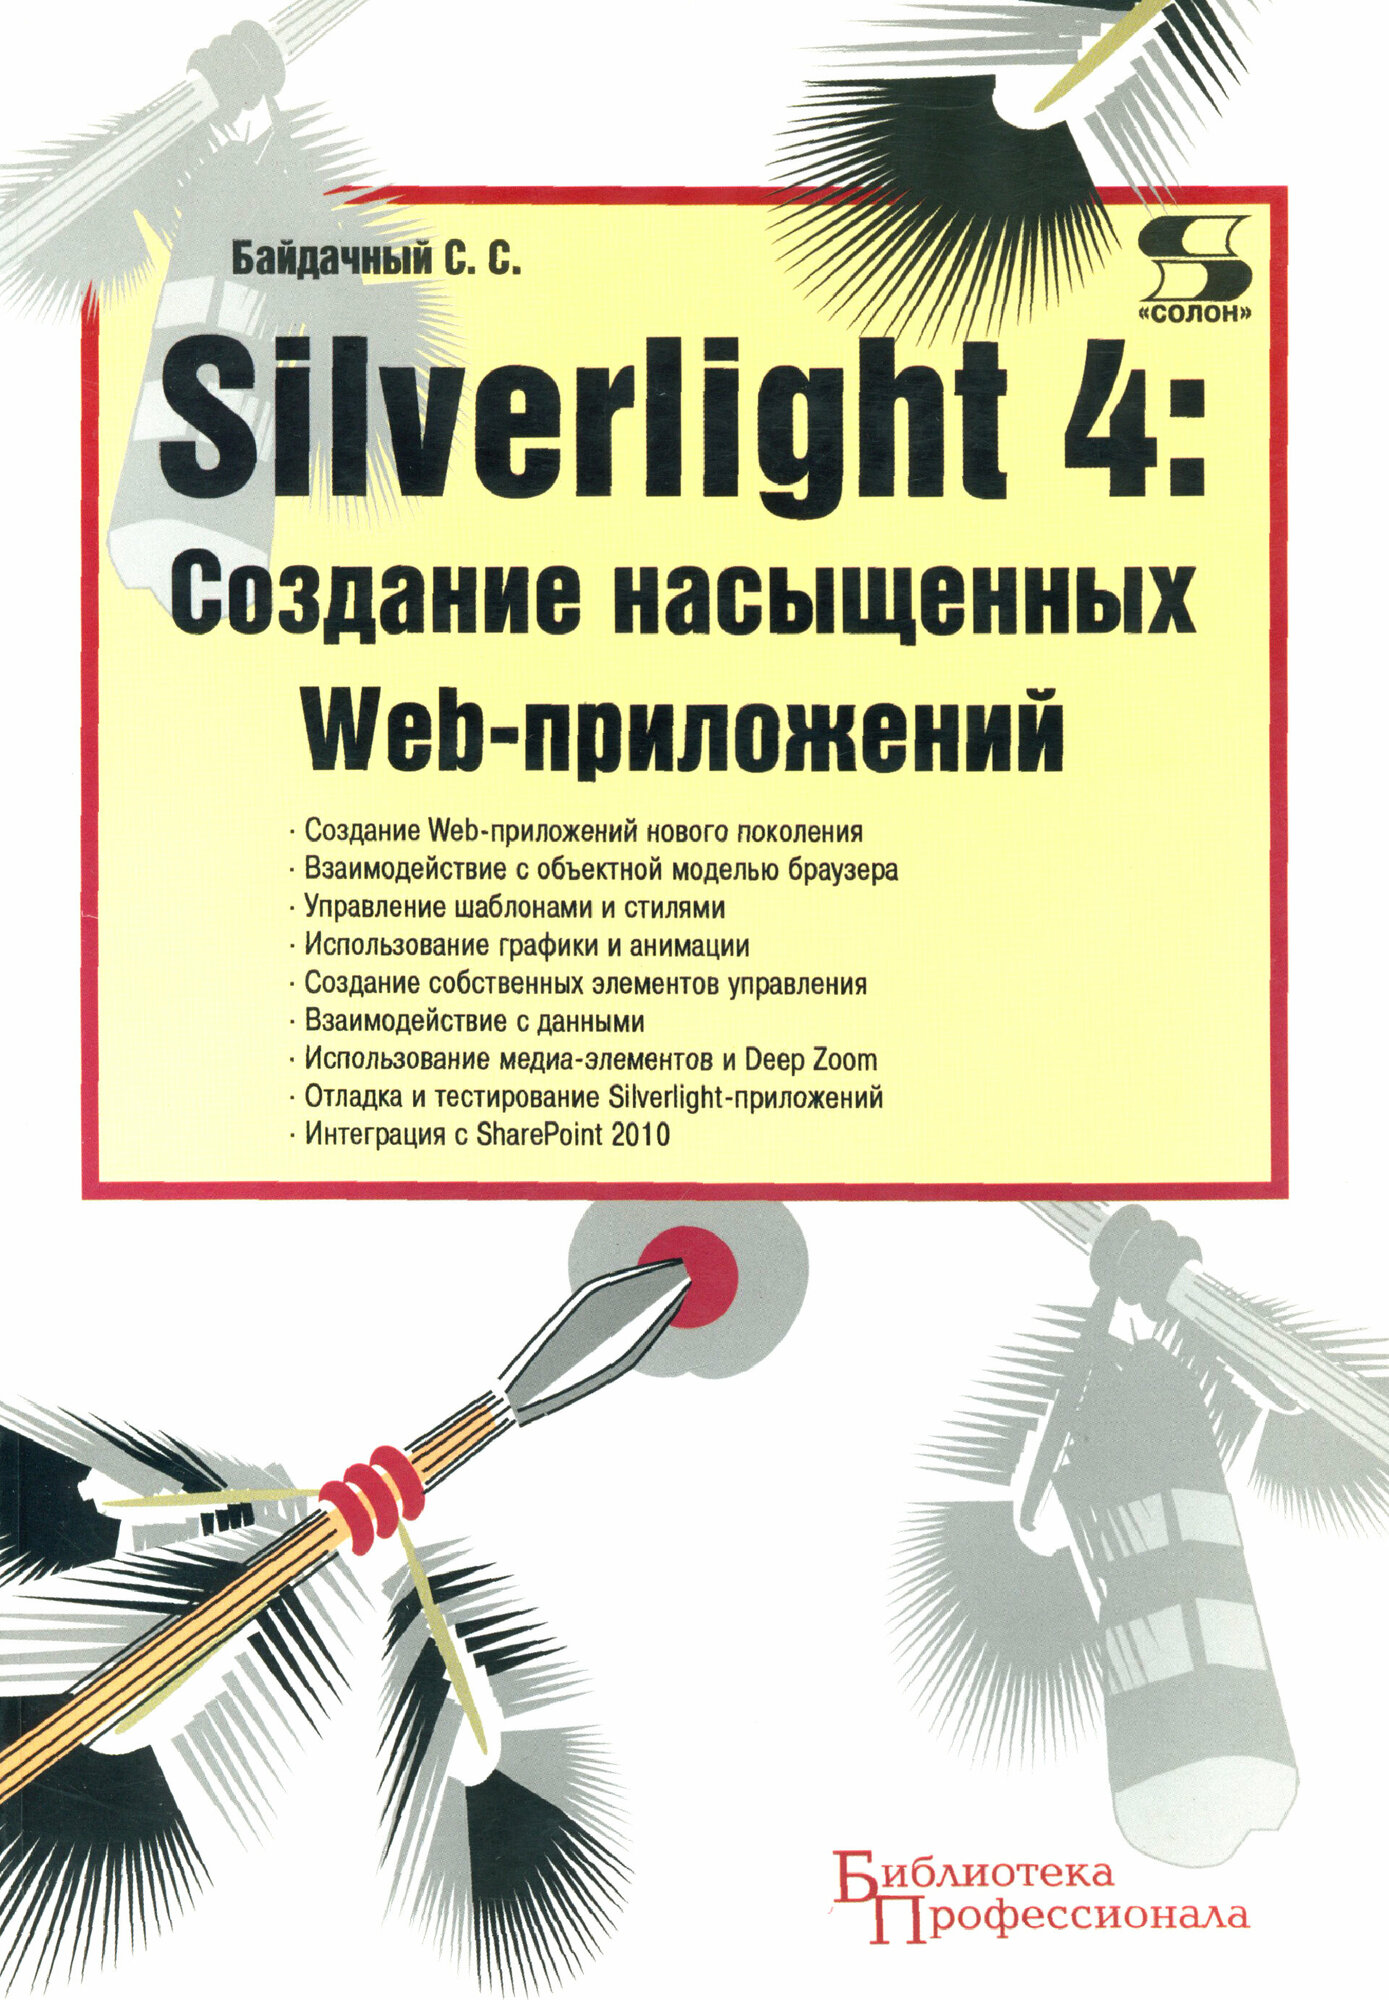 Silverlight 4: Создание насыщенных Web-приложений - фото №3